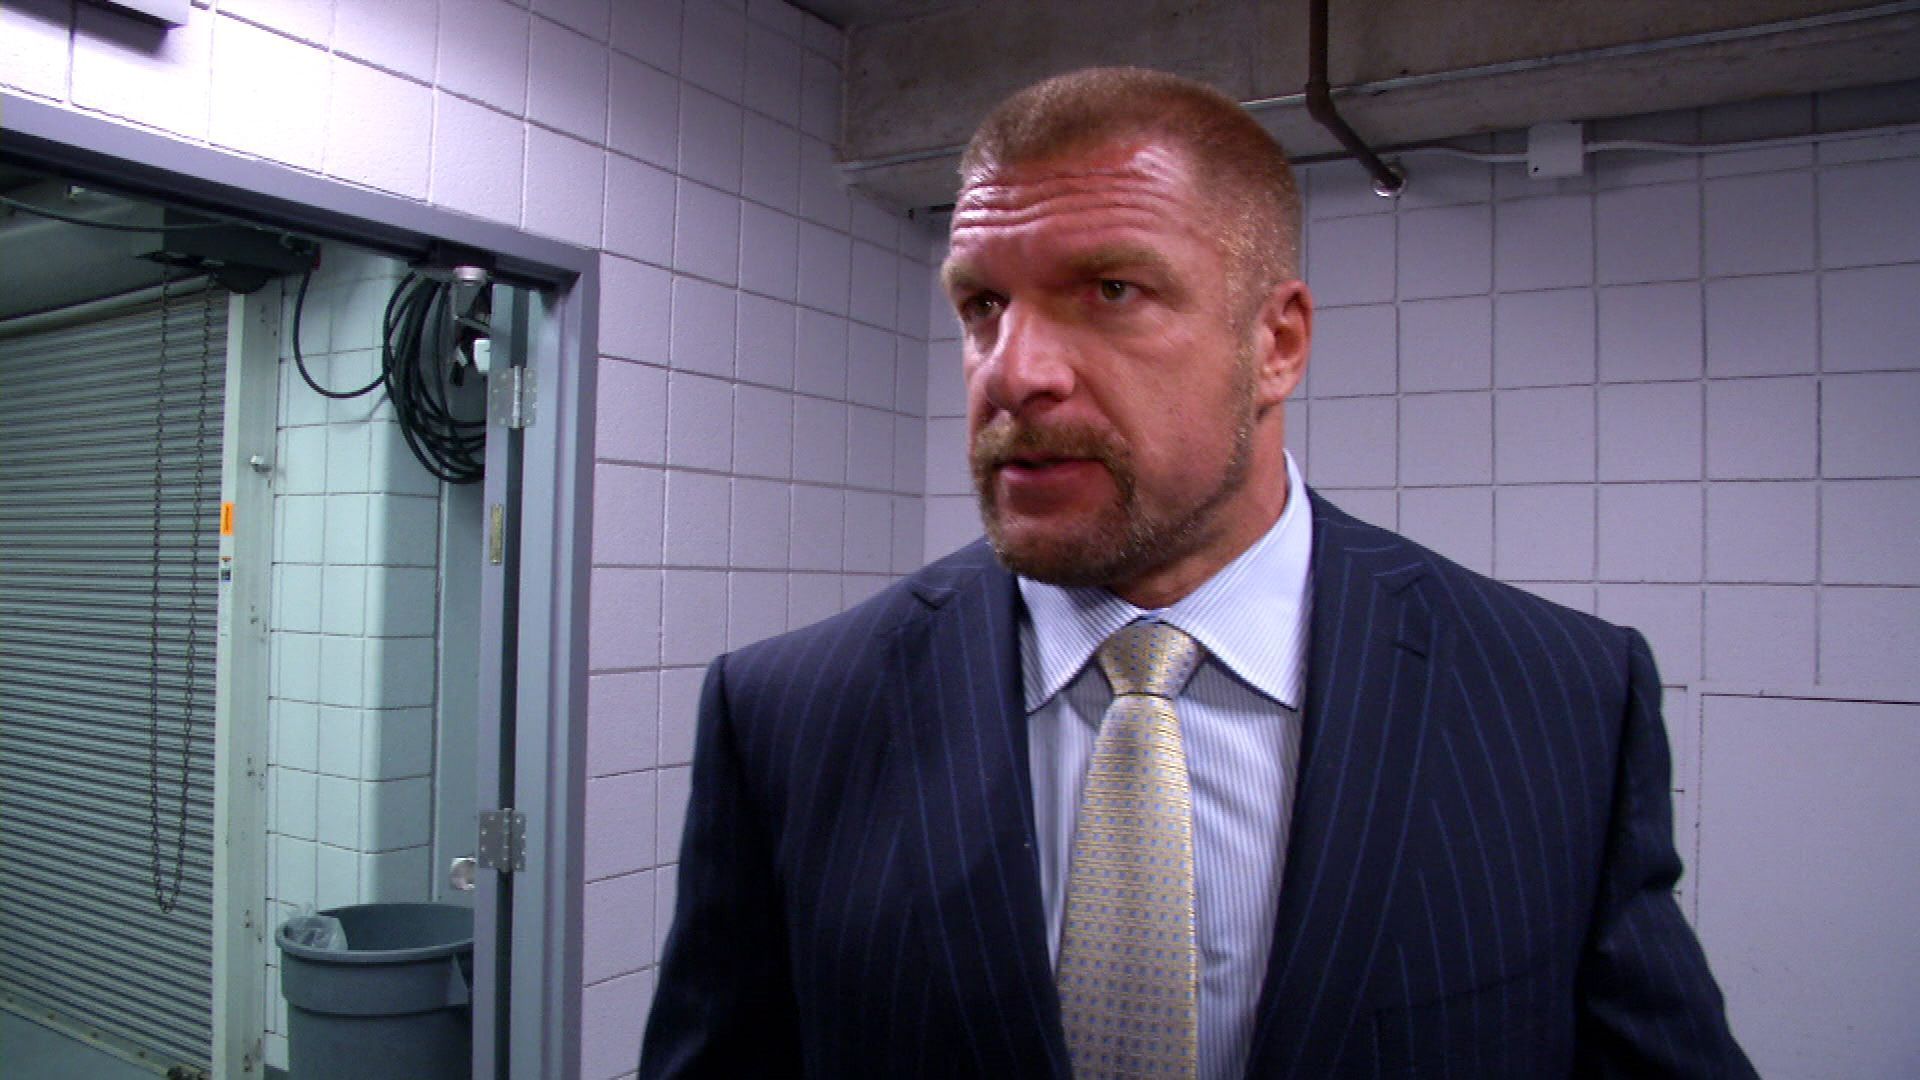 Triple H took over WWE